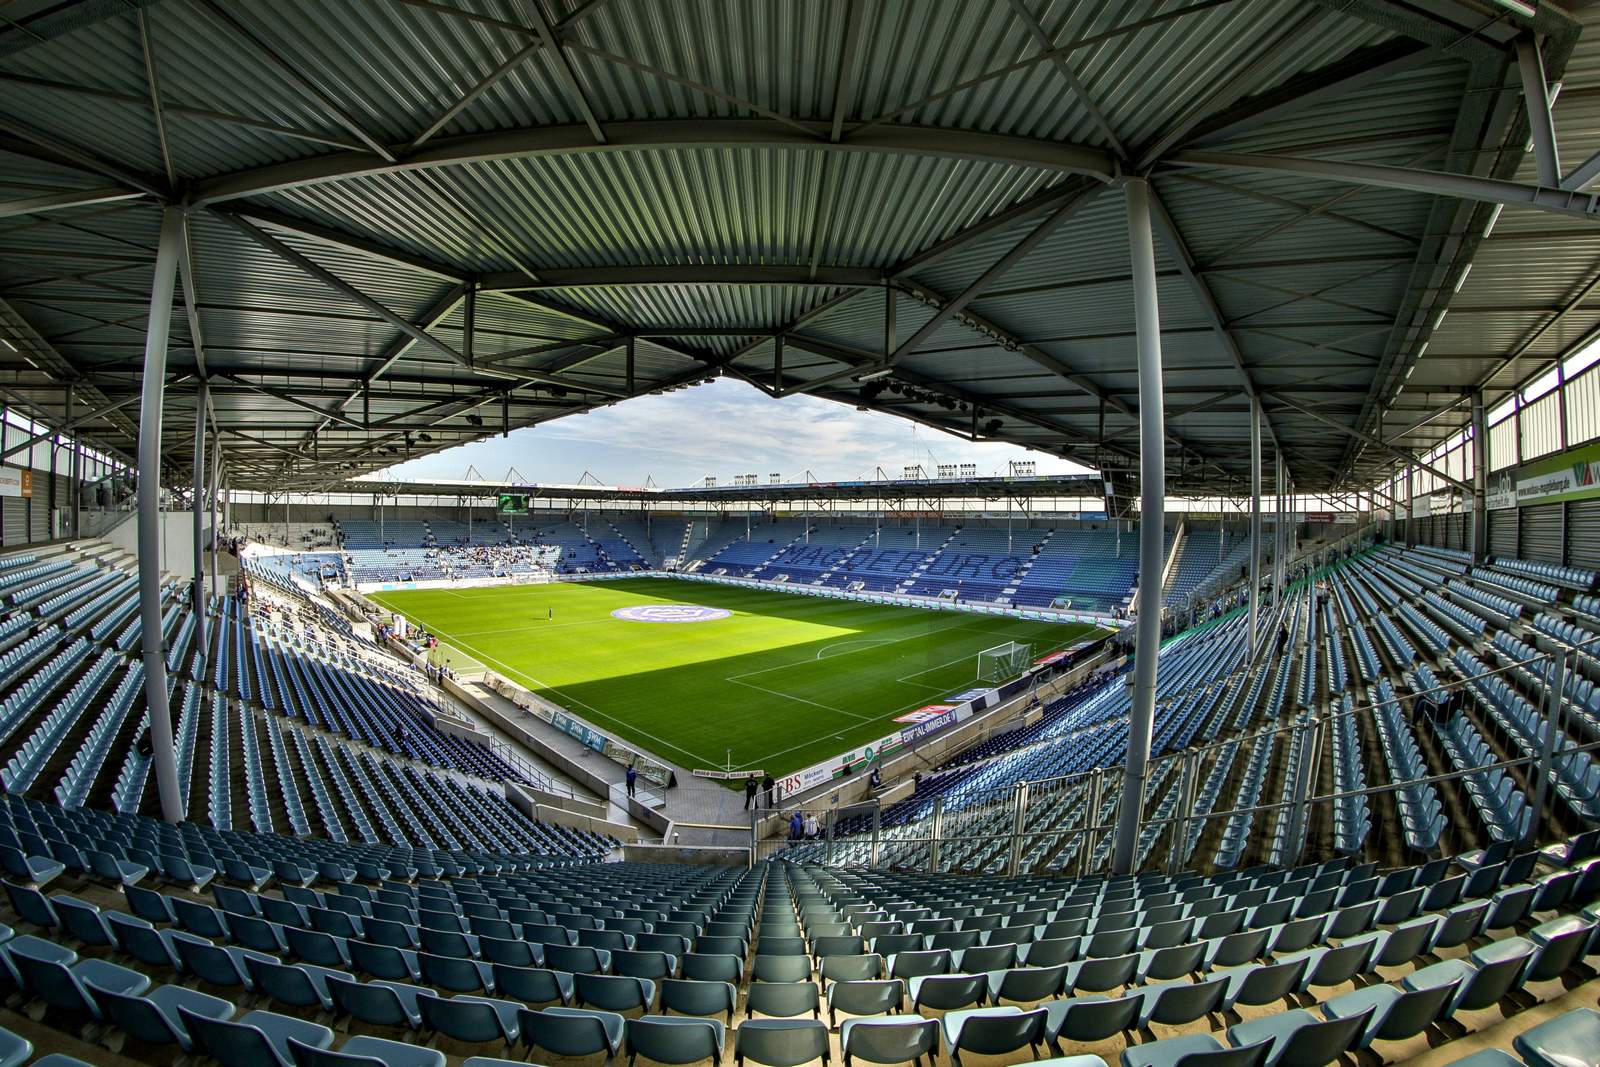 MDCC Arena Magdeburg